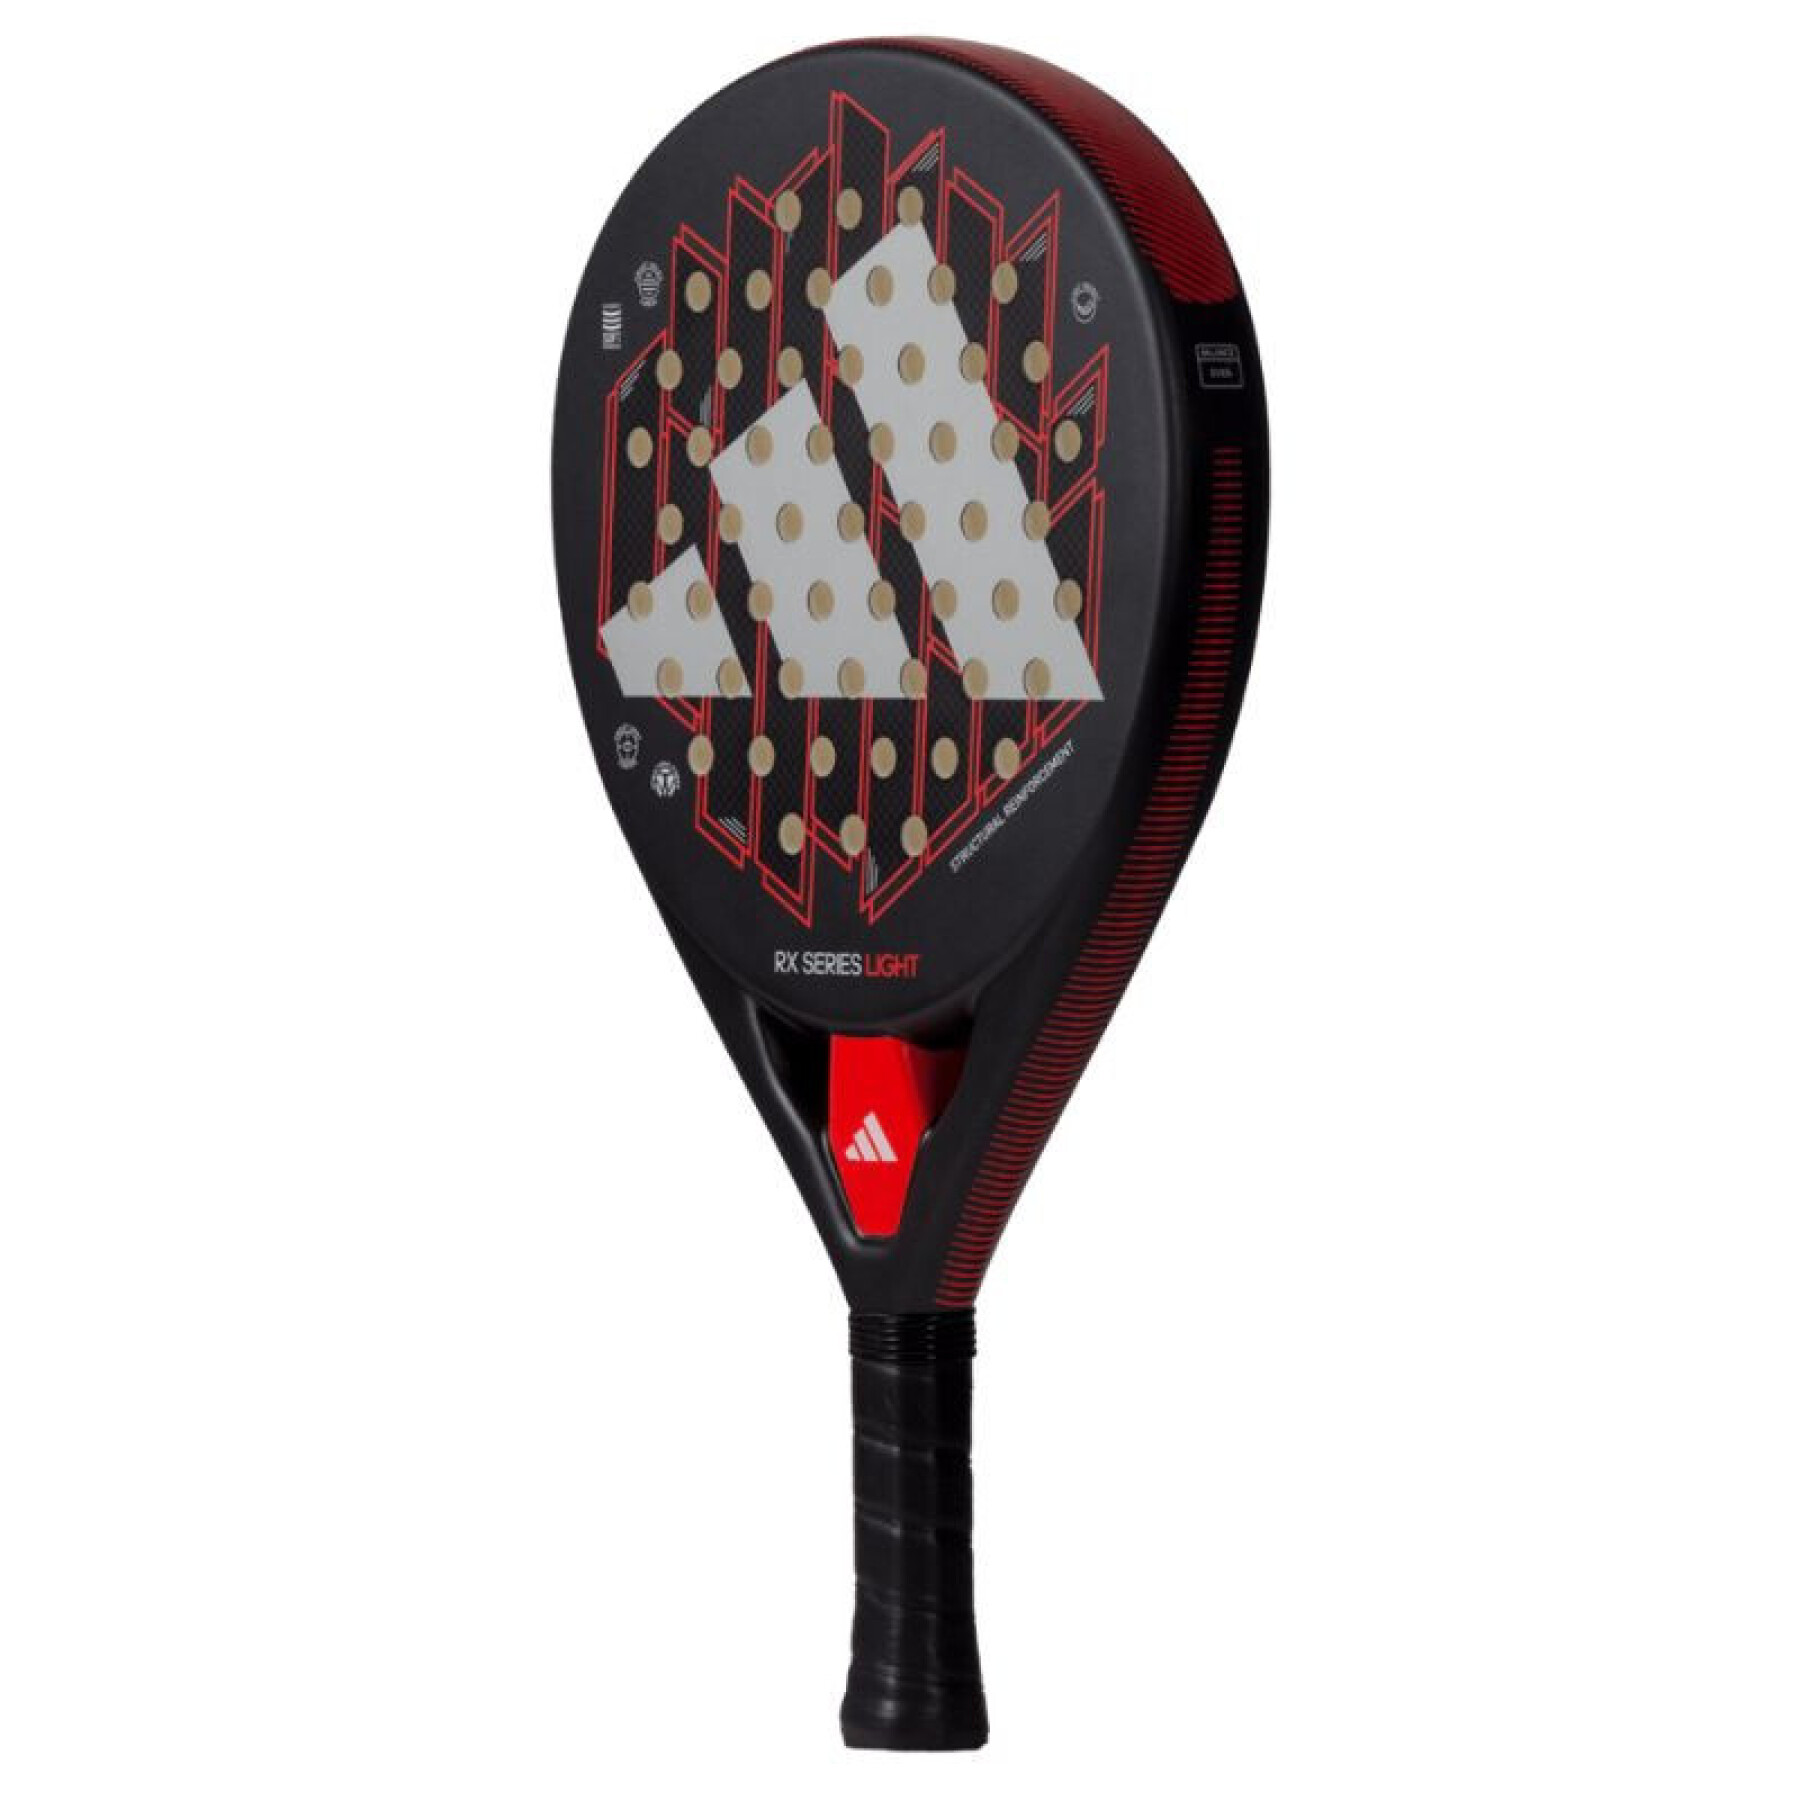 Padel rackets adidas Rx Series Light